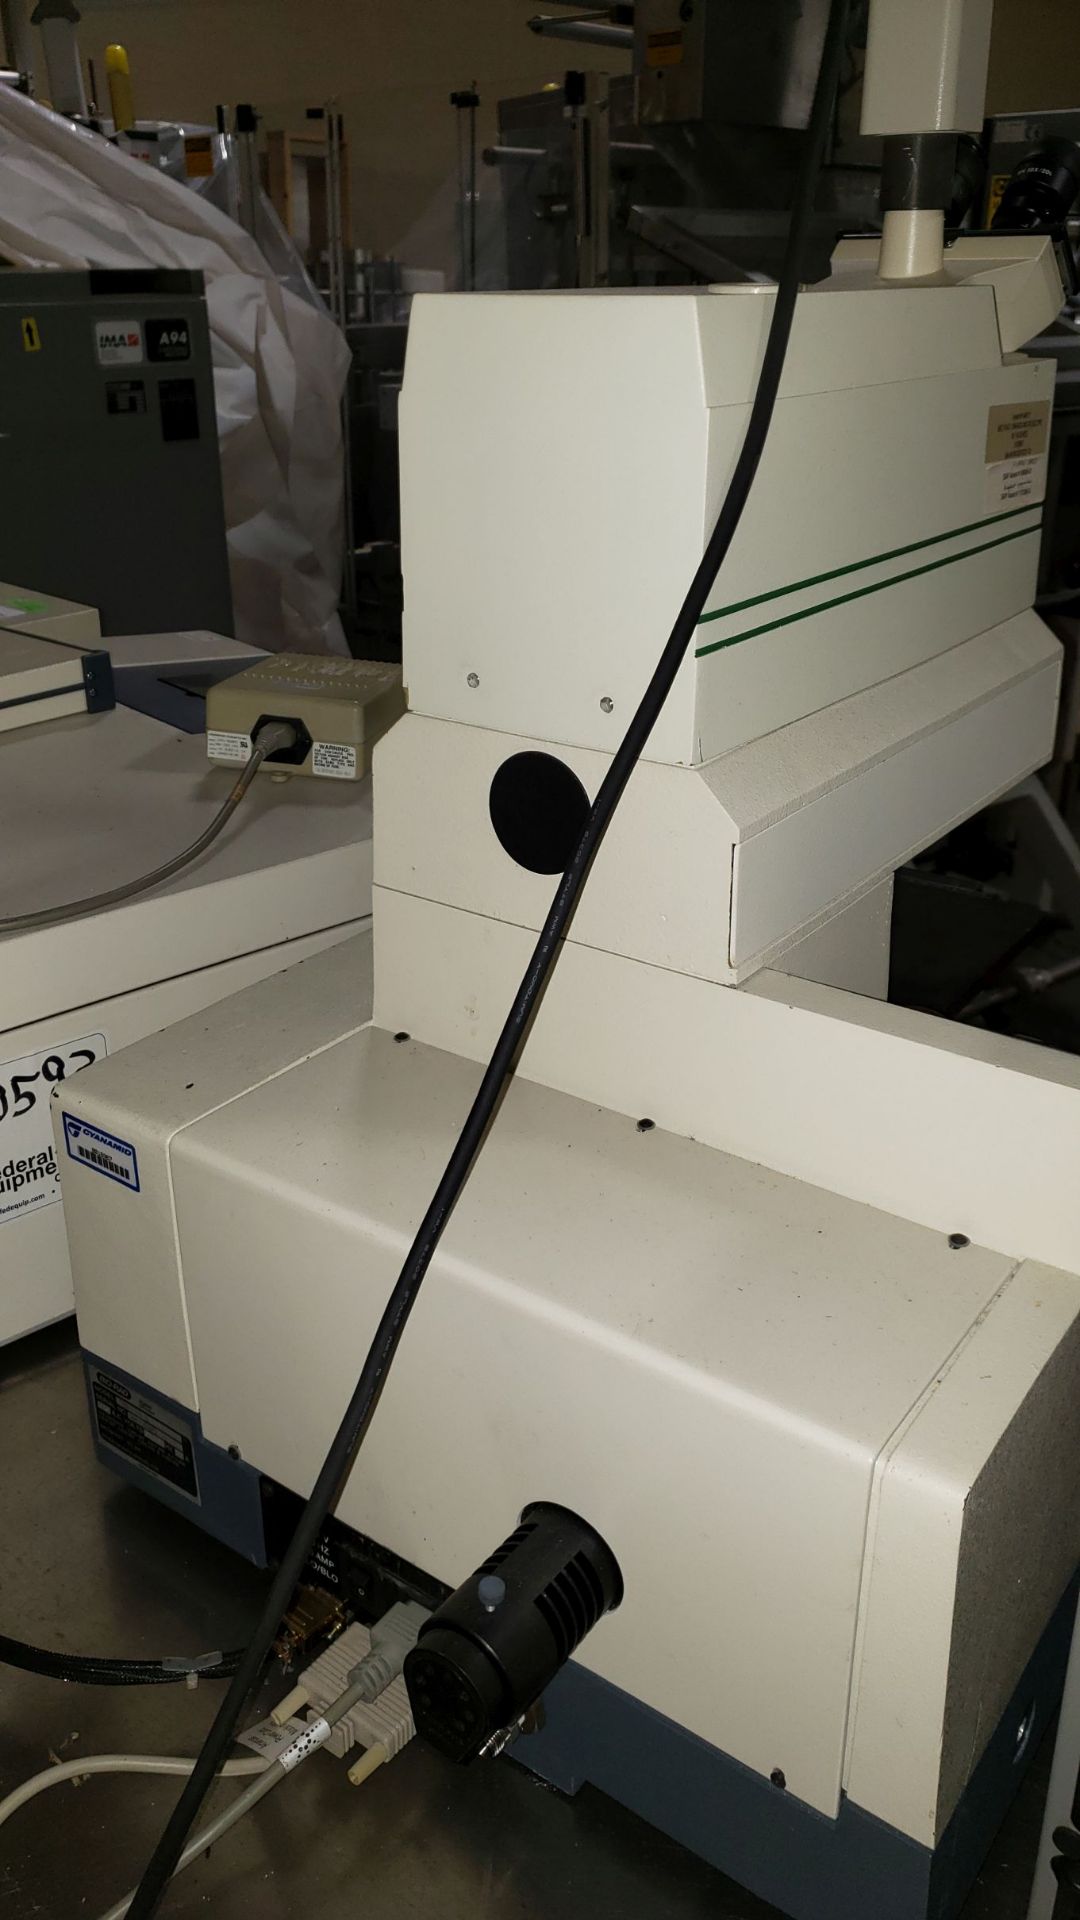 BIO RAD FTS60A/ 896 Spectrometer, BIO RAD UMA500 Microscope and DIGILAB FTIR Spectrometer - Image 16 of 27